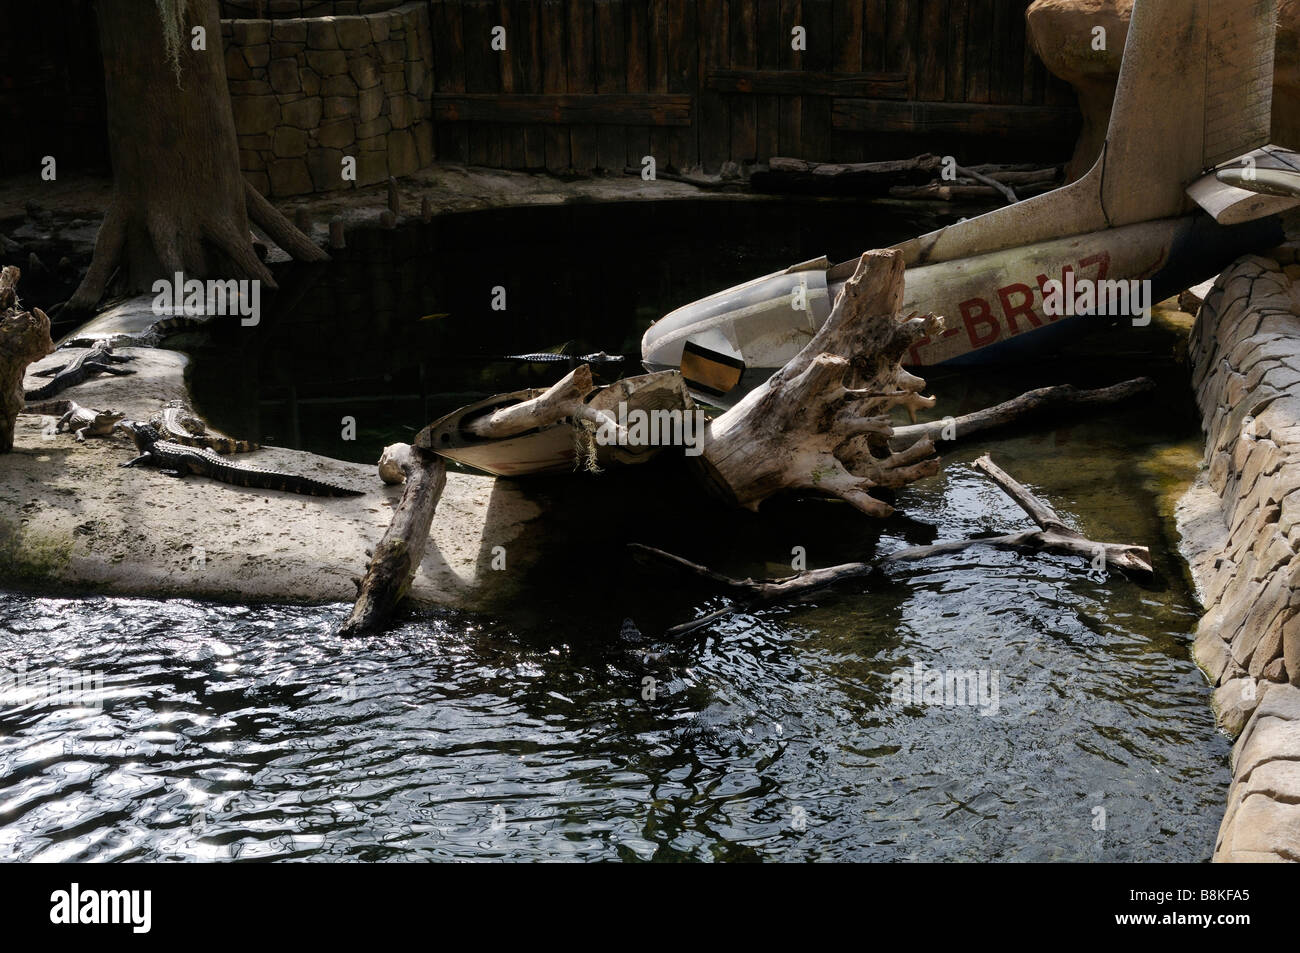 Stock photo of the inside of la planete des crocodiles in civaux France Stock Photo